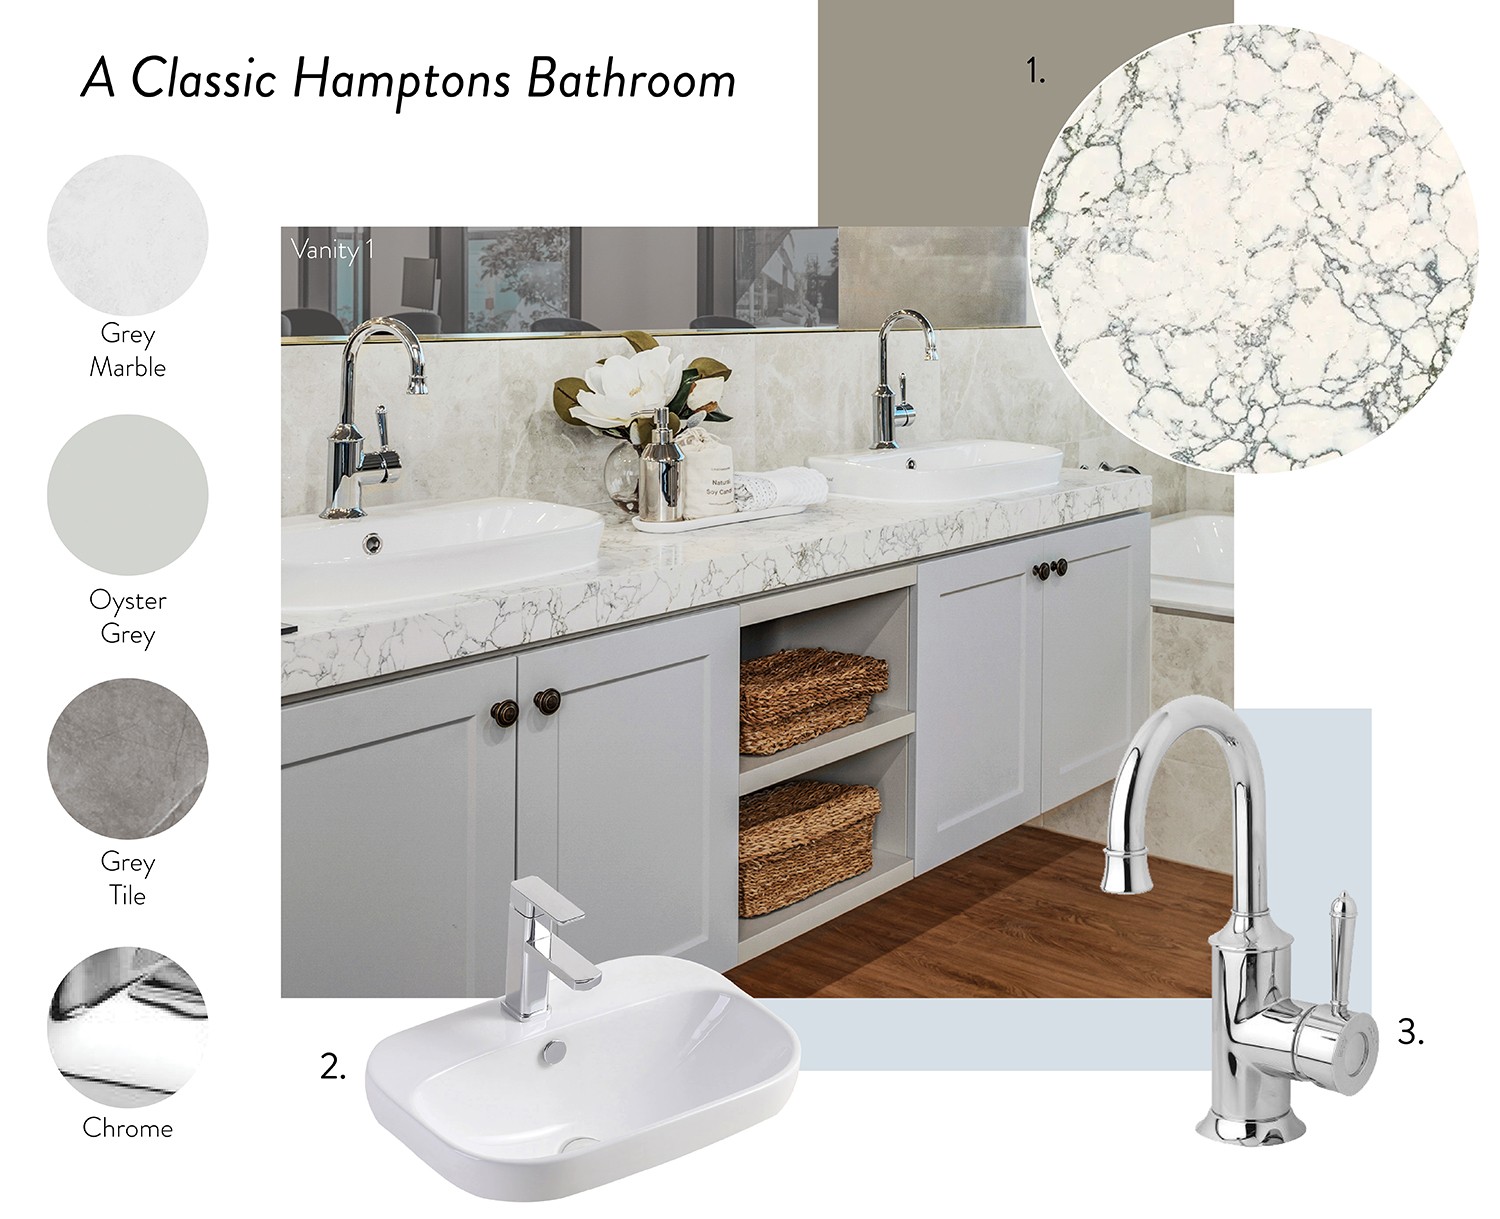 2-Ways-to-Create-a-Hamptons-Bathroom-carlisle-homes2.jpg